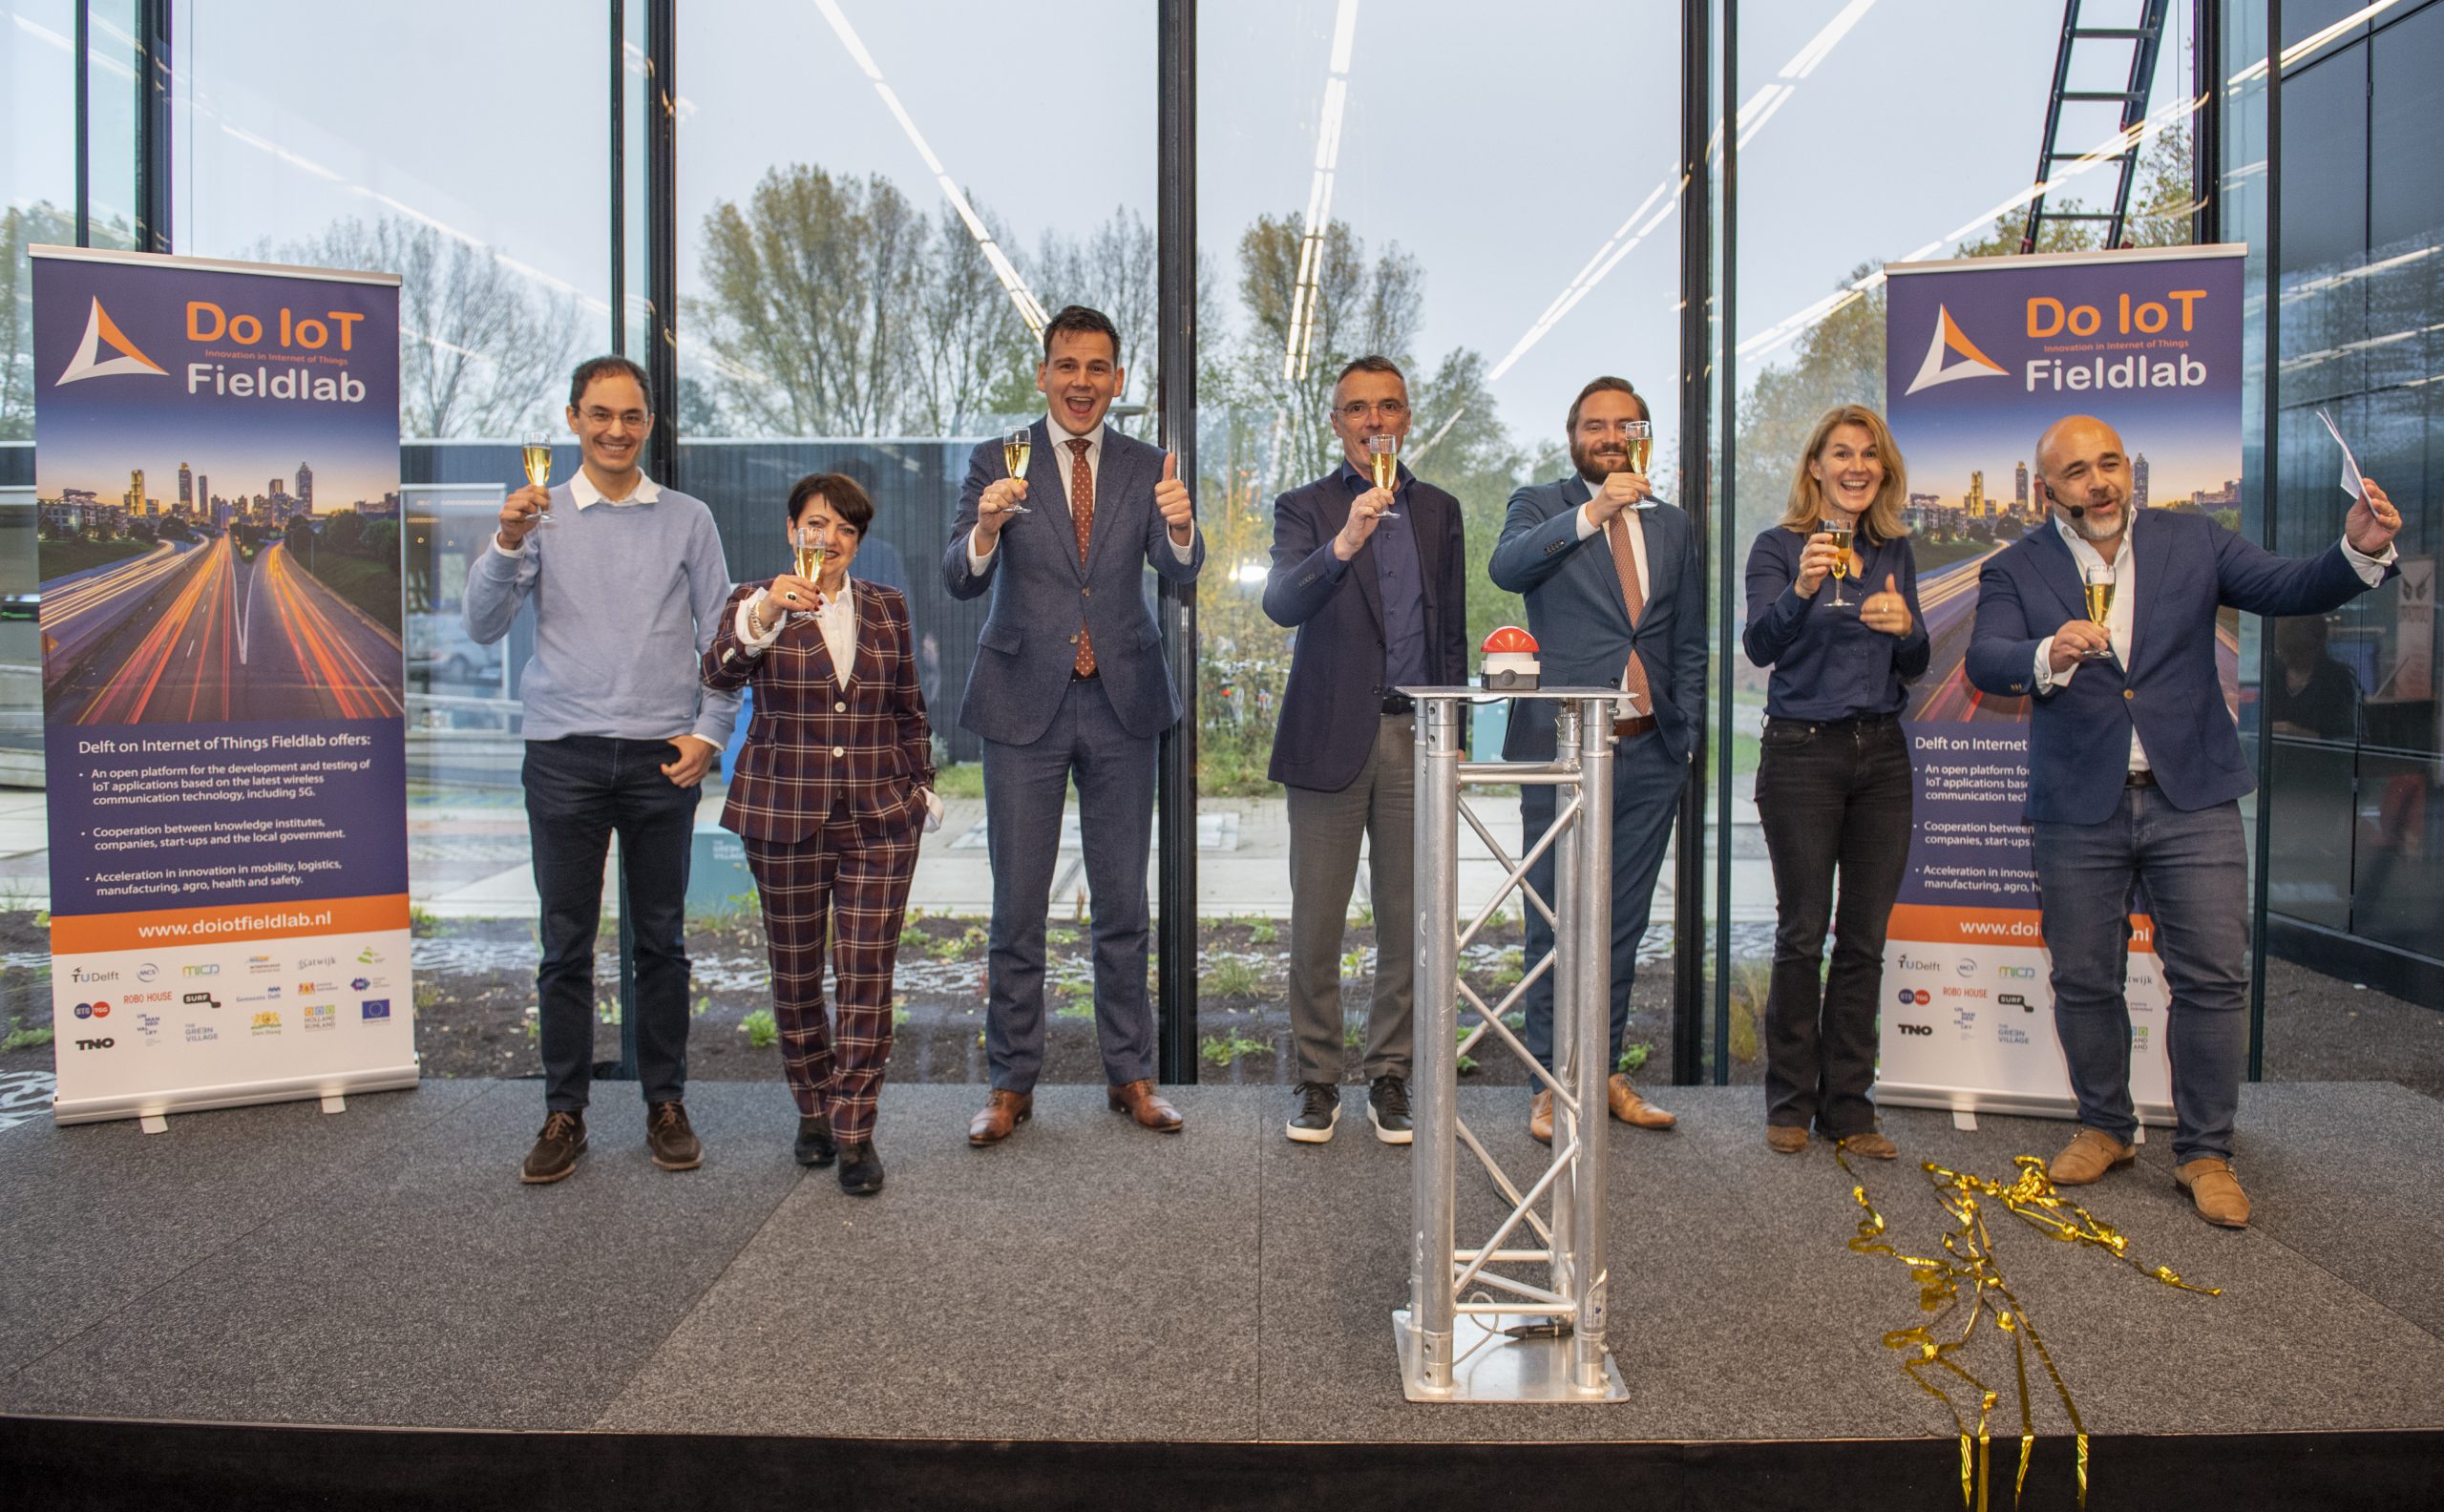 TU Delft opens 5G test facilities - Do IoT Fieldlab